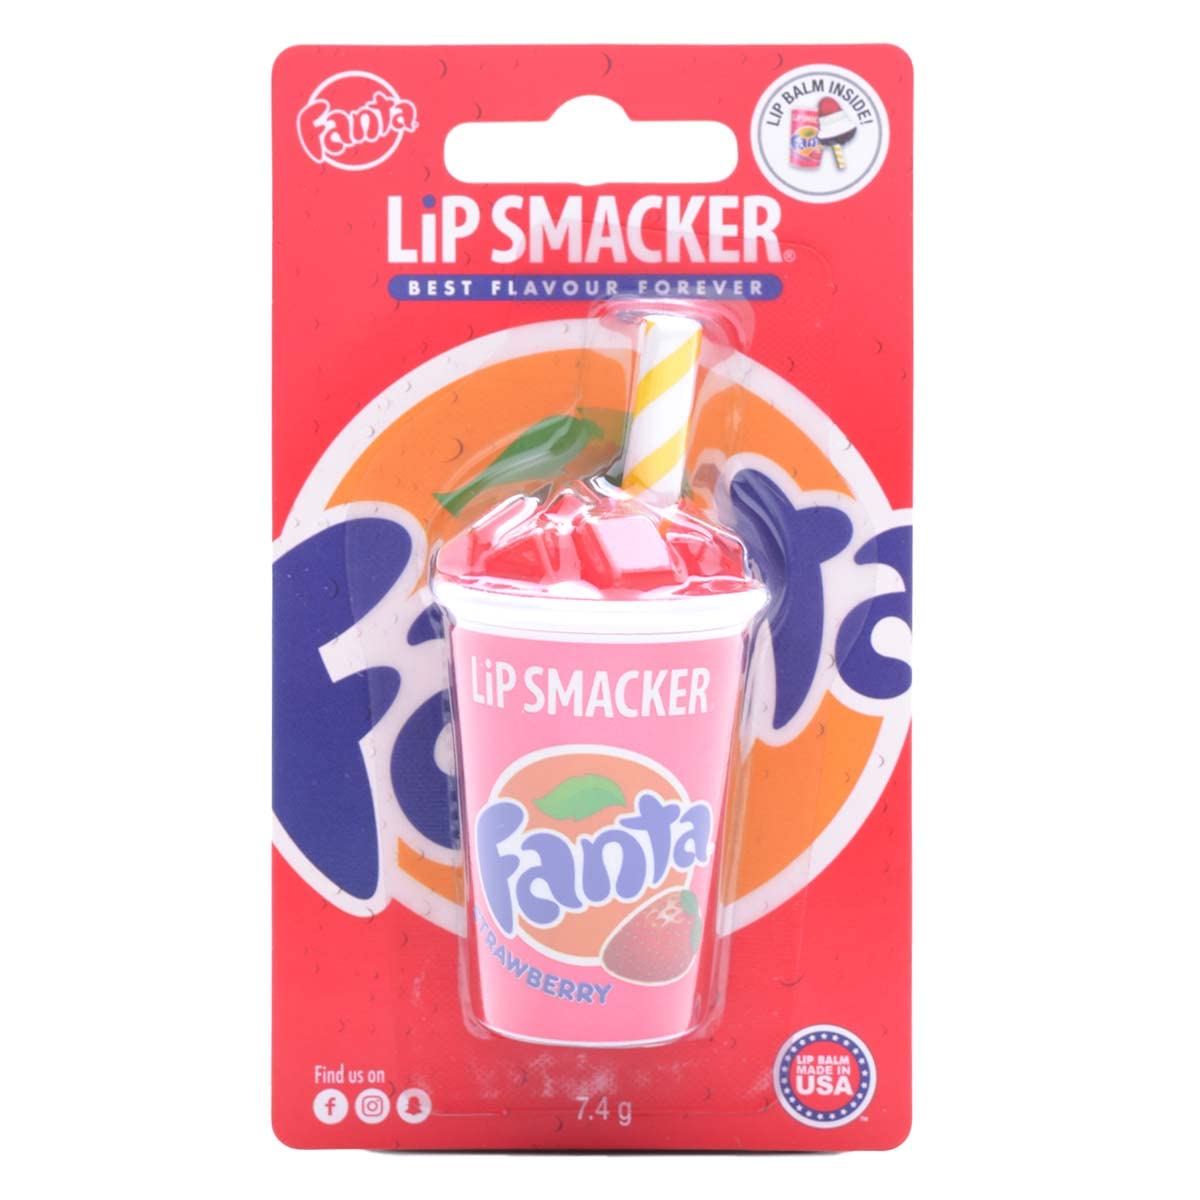 Lip Smacker Coca Cola Collection, lip balm for kids - Strawberry Fanta Strawberry, beverage cup : Beauty & Personal Care